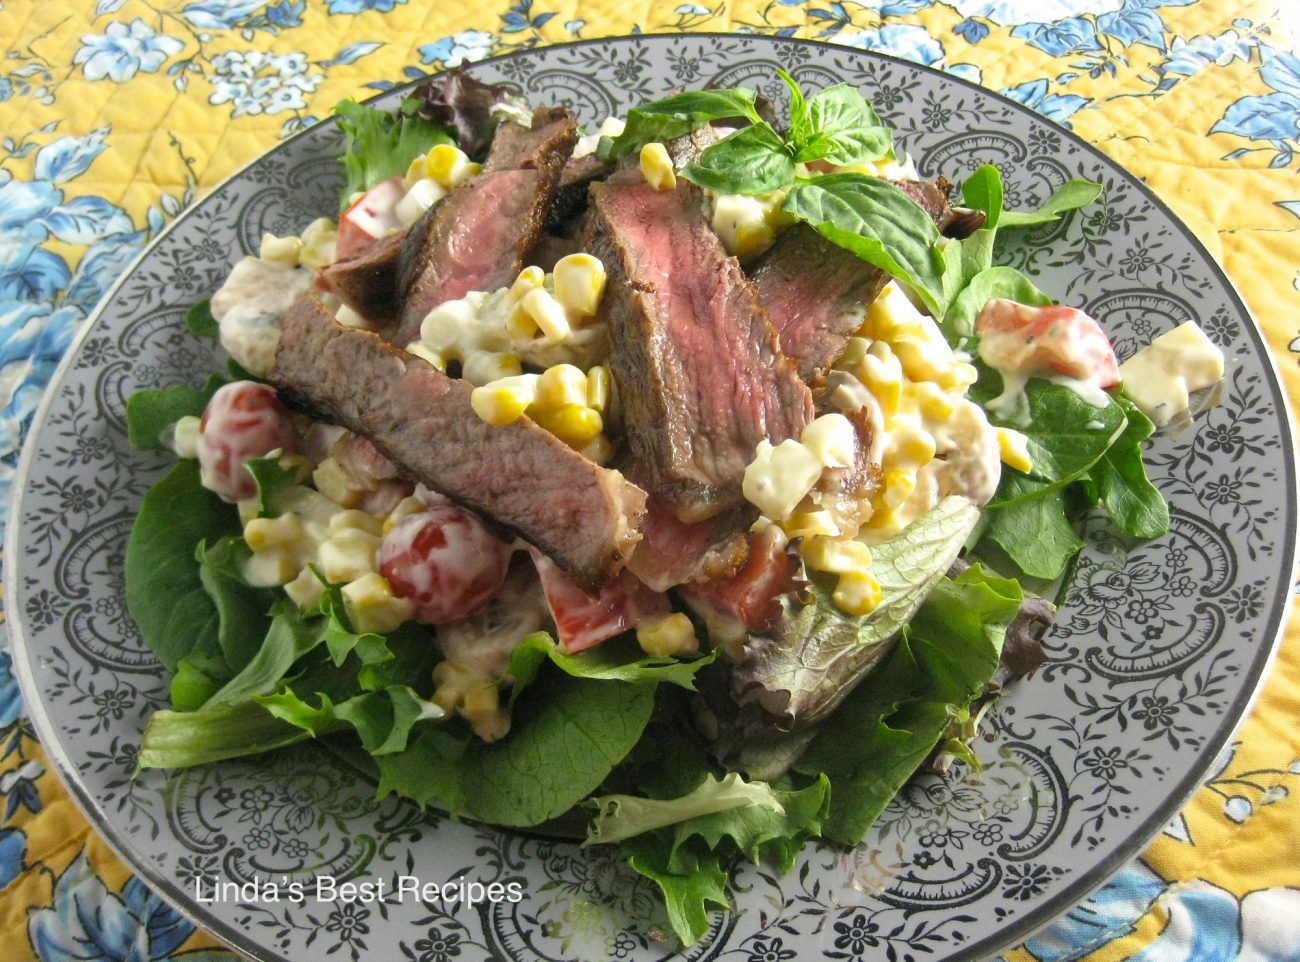 Grilled Steak and Veggie Salad